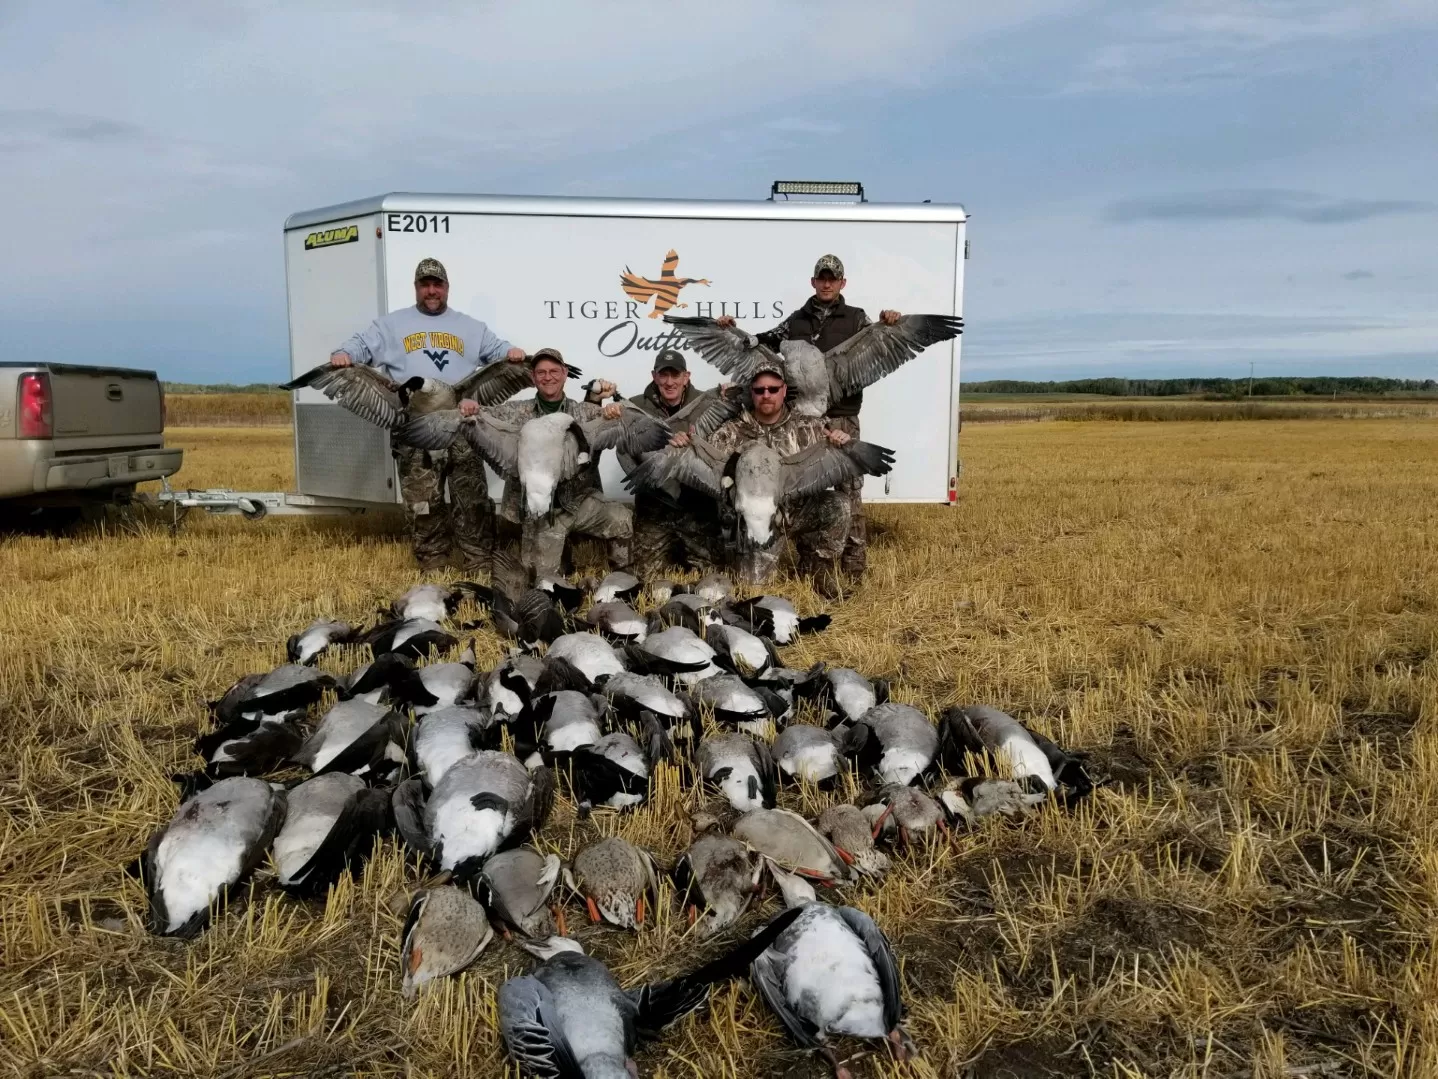 Canada Goose Hunting